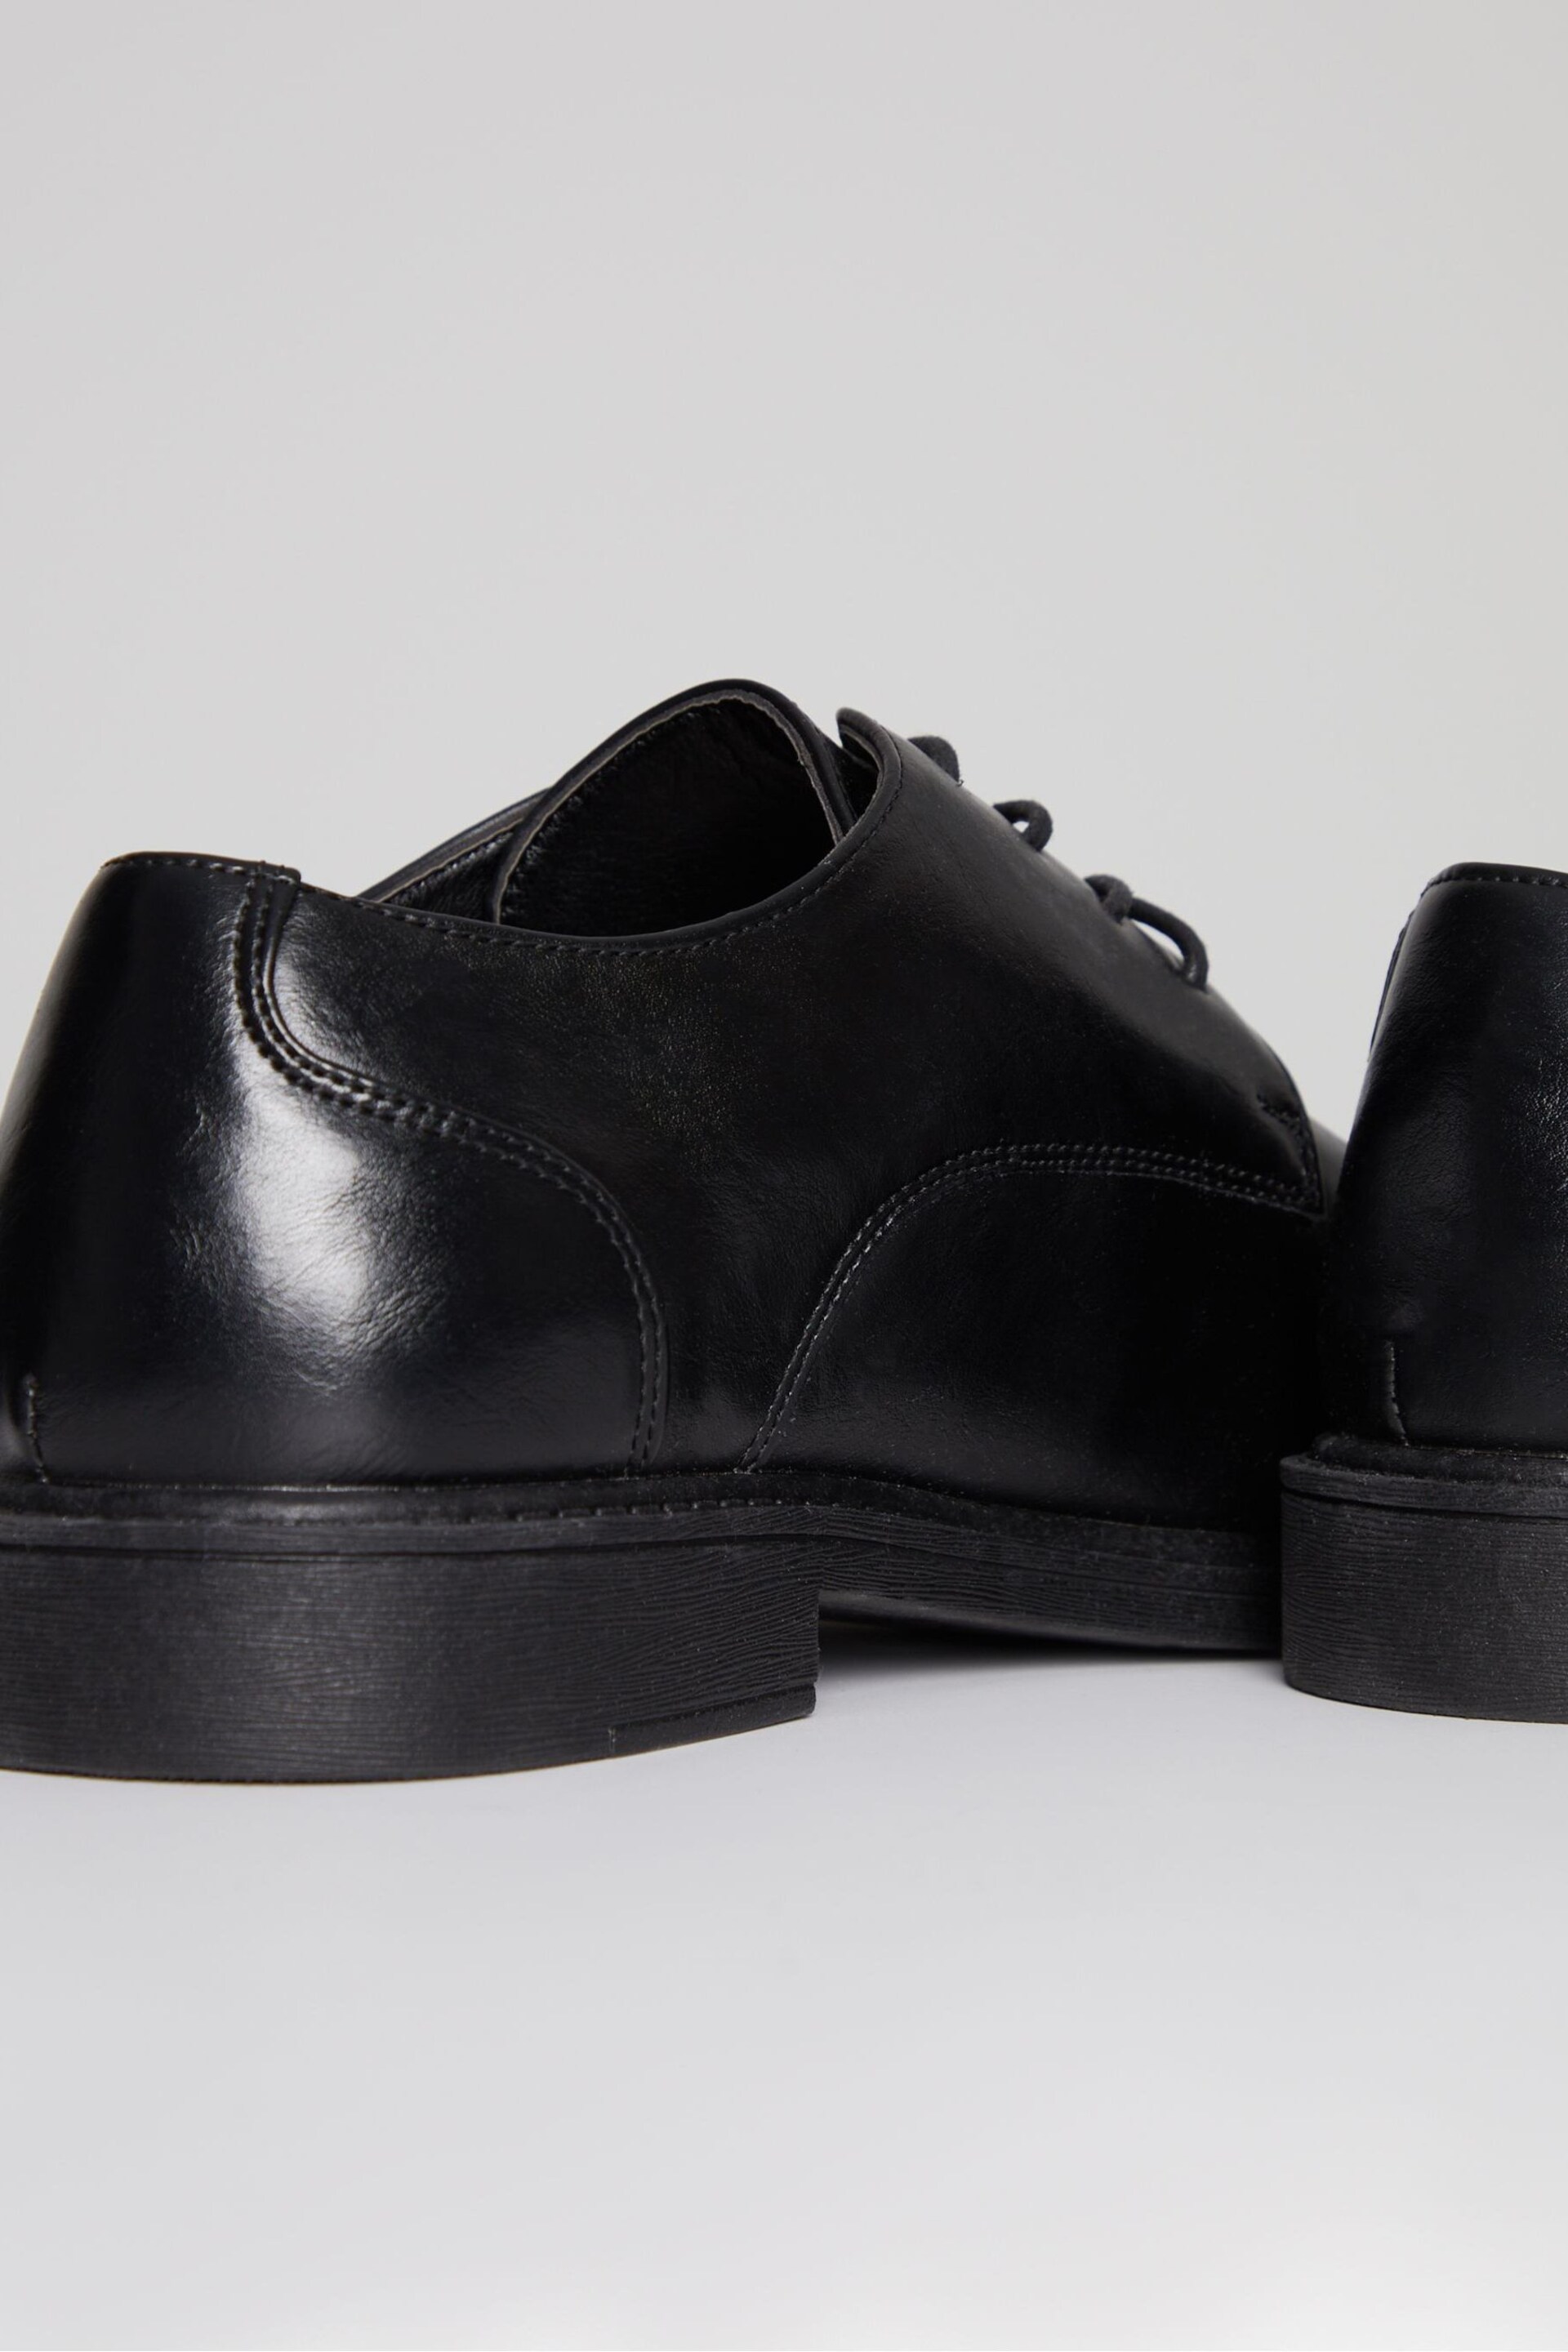 Threadbare Black Smart Derby Shoes - Image 4 of 4